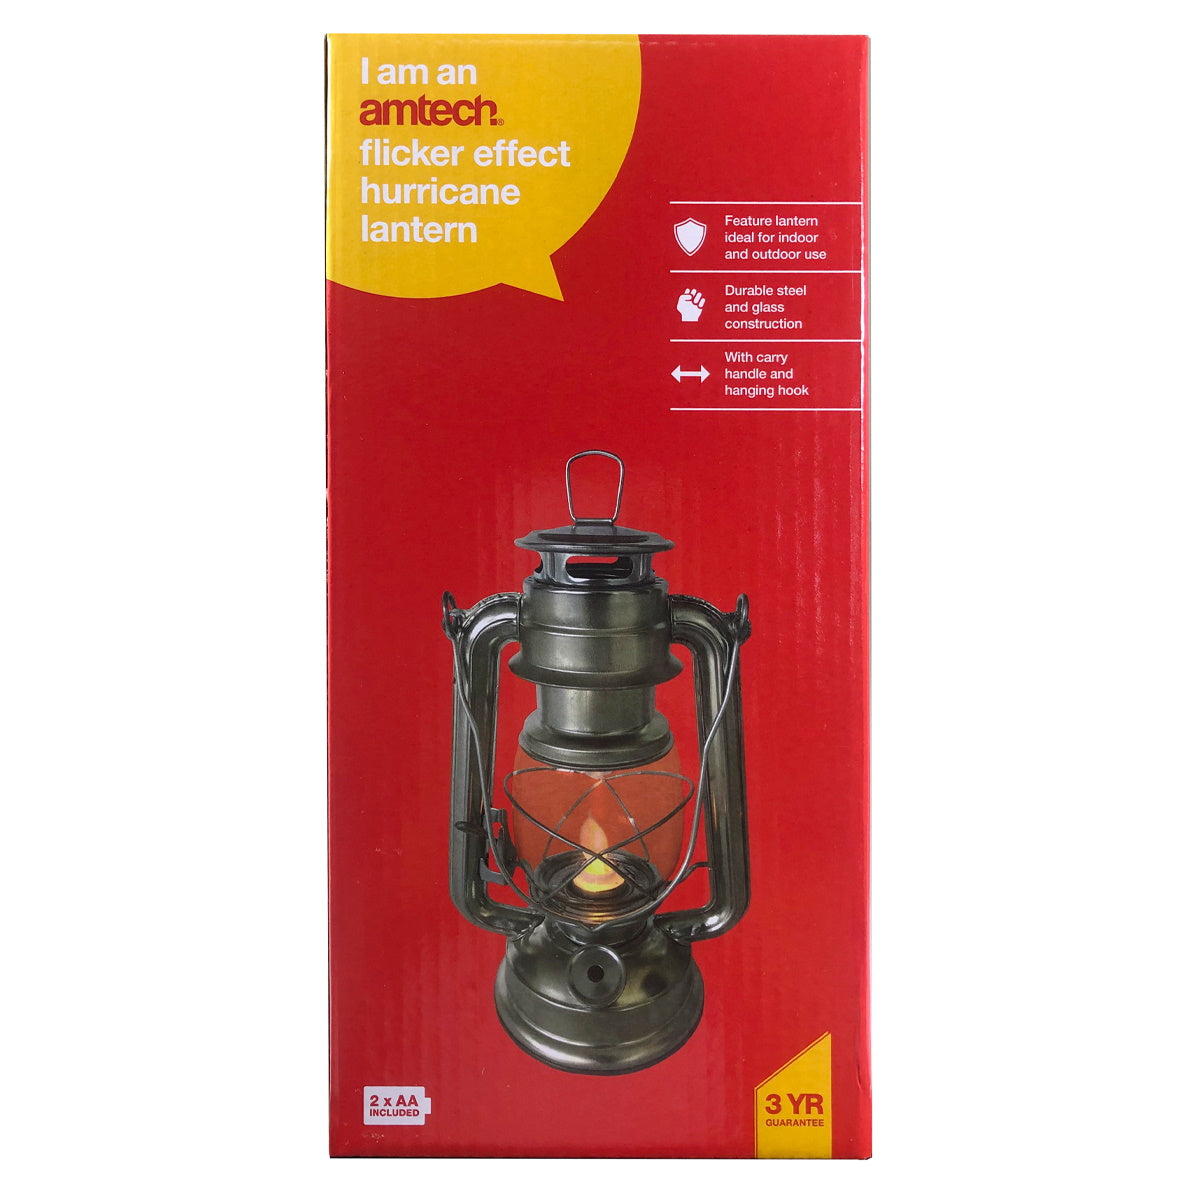 Amtech S8012 Flicker Effect Hurricane Lantern Battery Powered - Premium Lanterns from DK Tools - Just $9.50! Shop now at W Hurst & Son (IW) Ltd